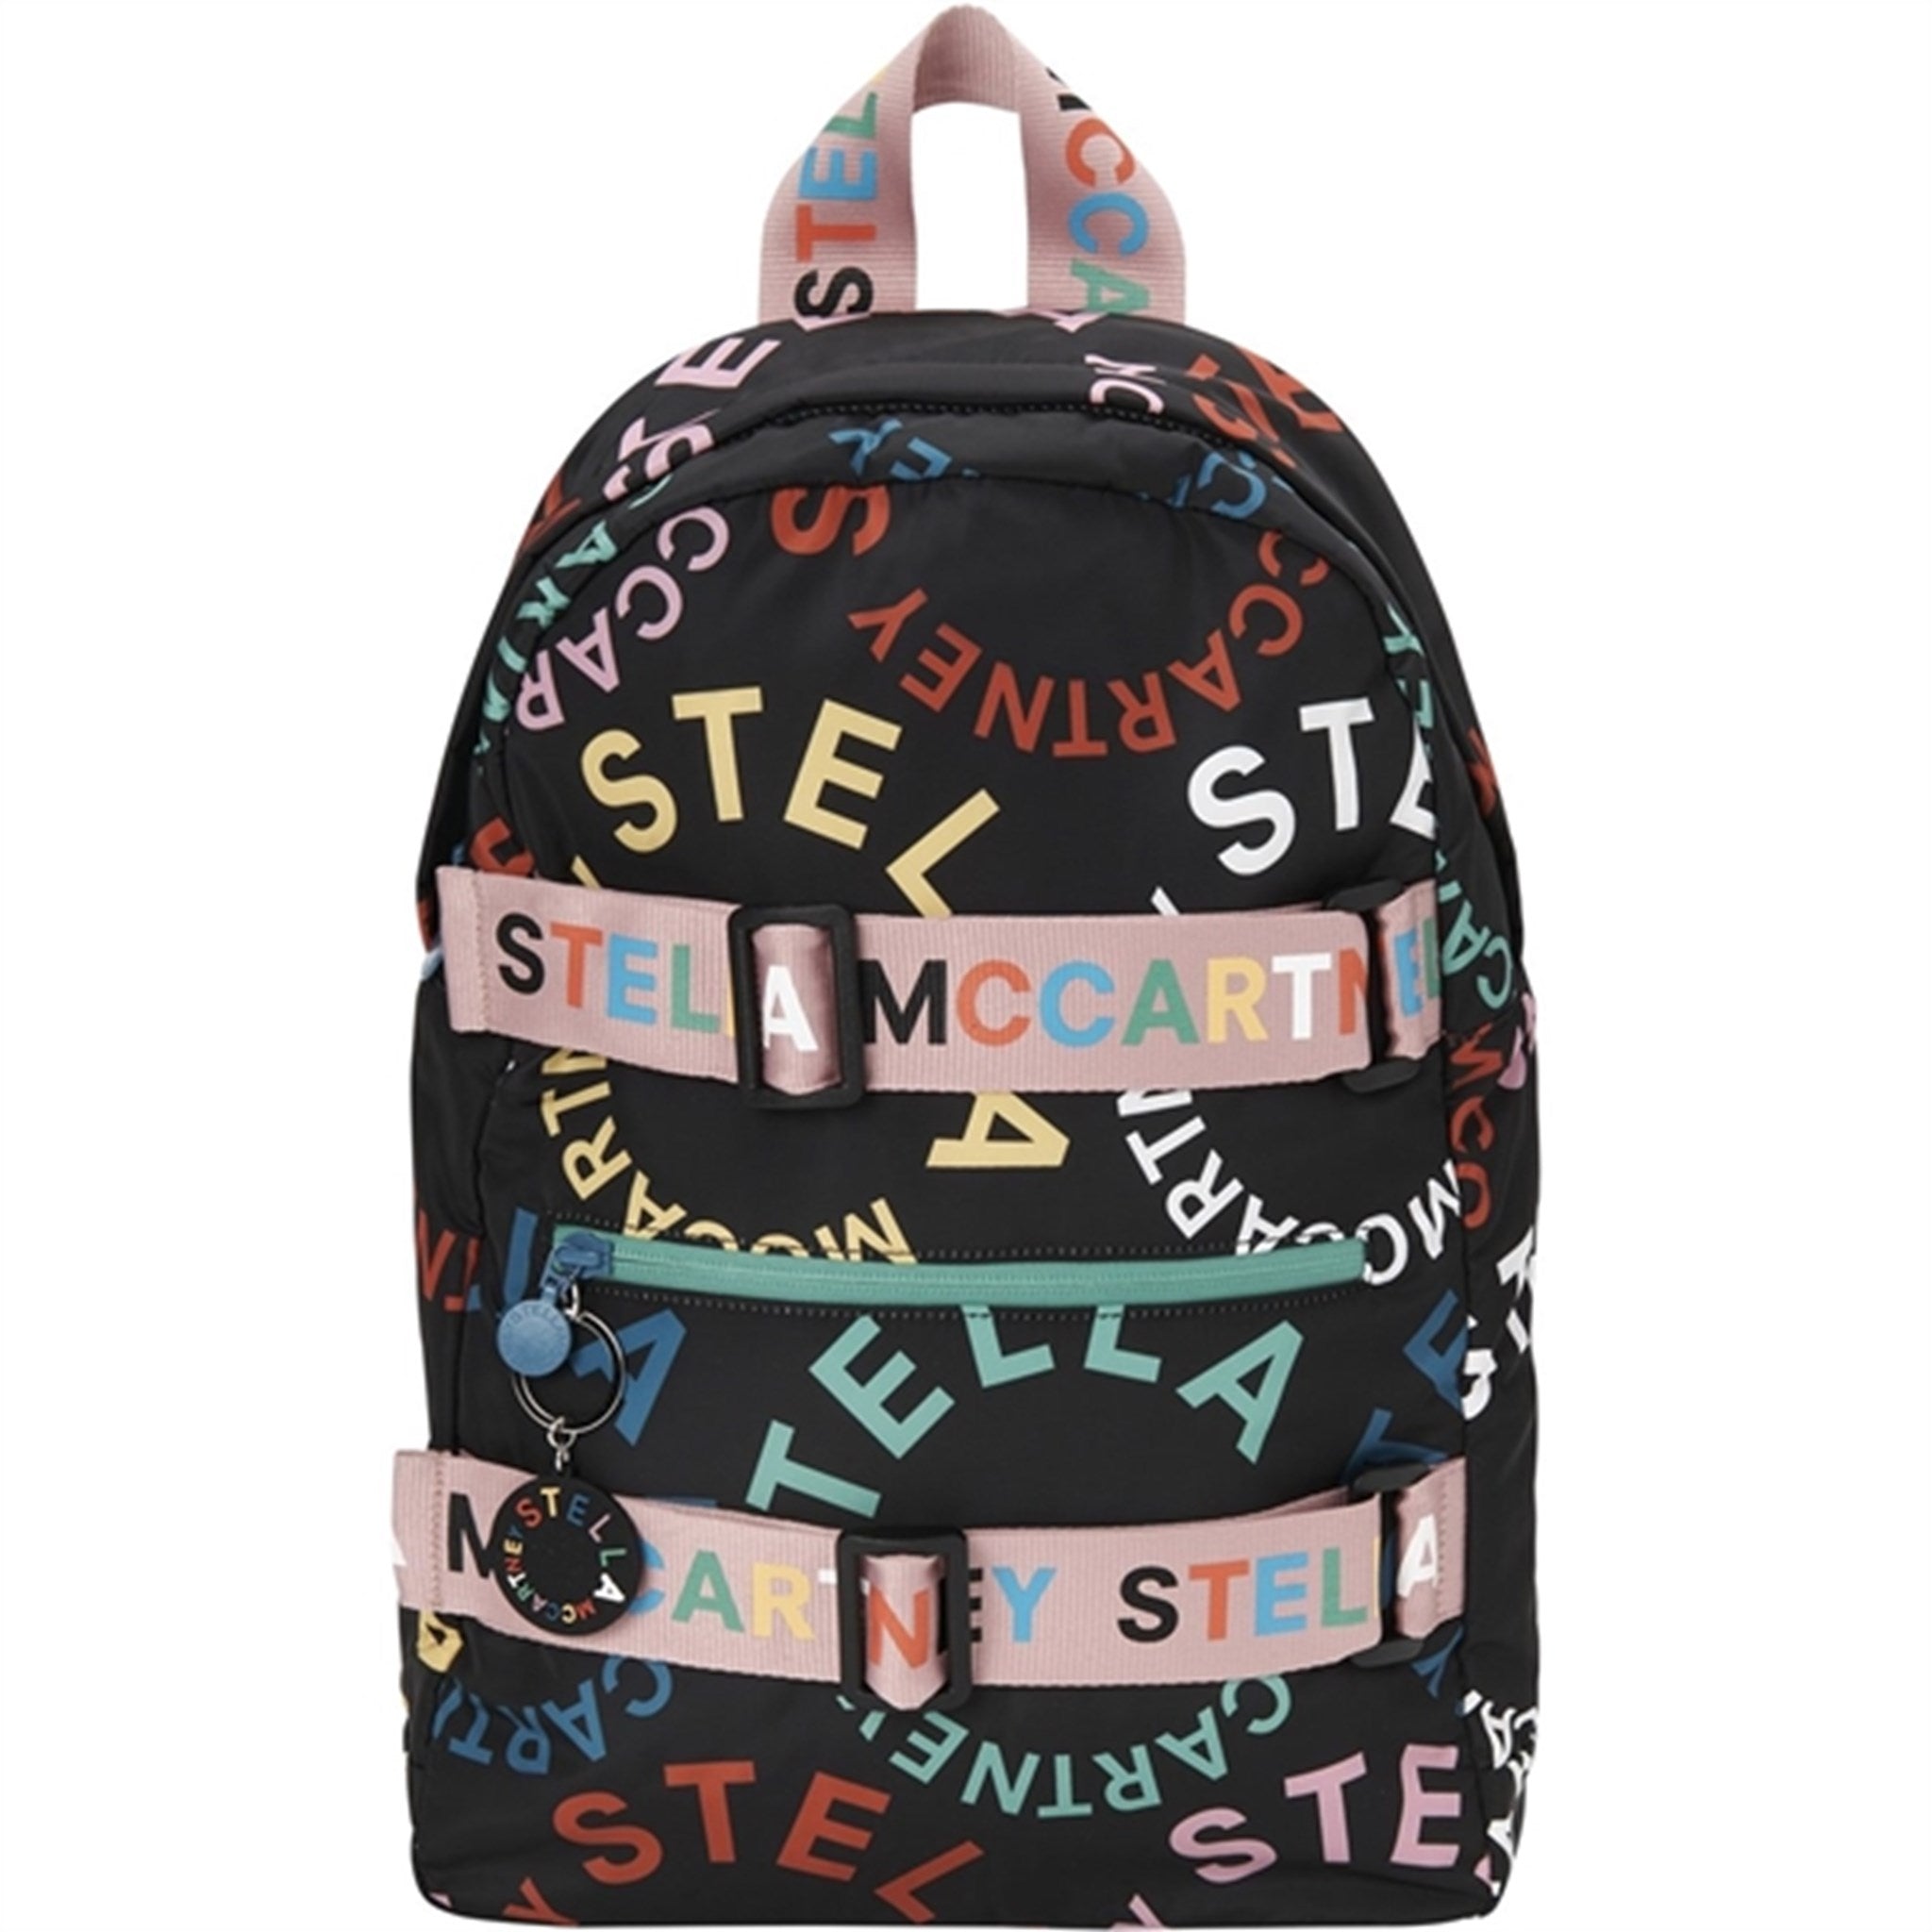 Stella McCartney Black/Colourful Bag